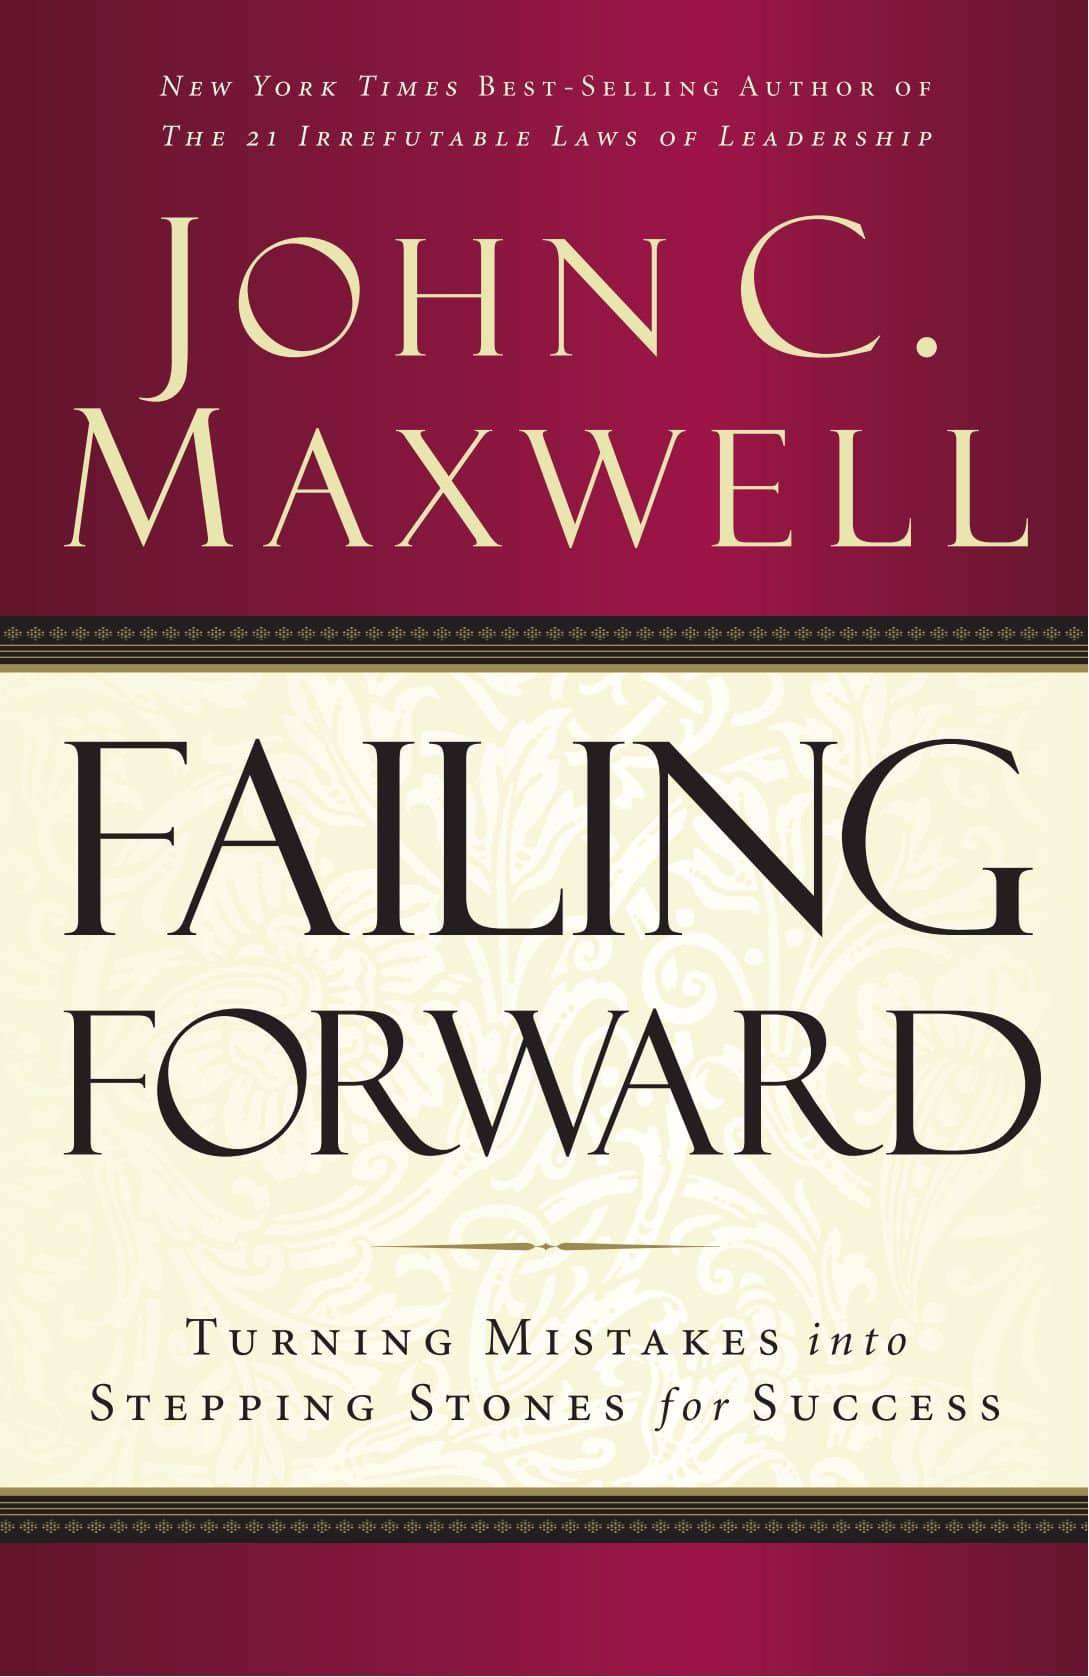 Failing Forward by John C. Maxwell - Self Development Book